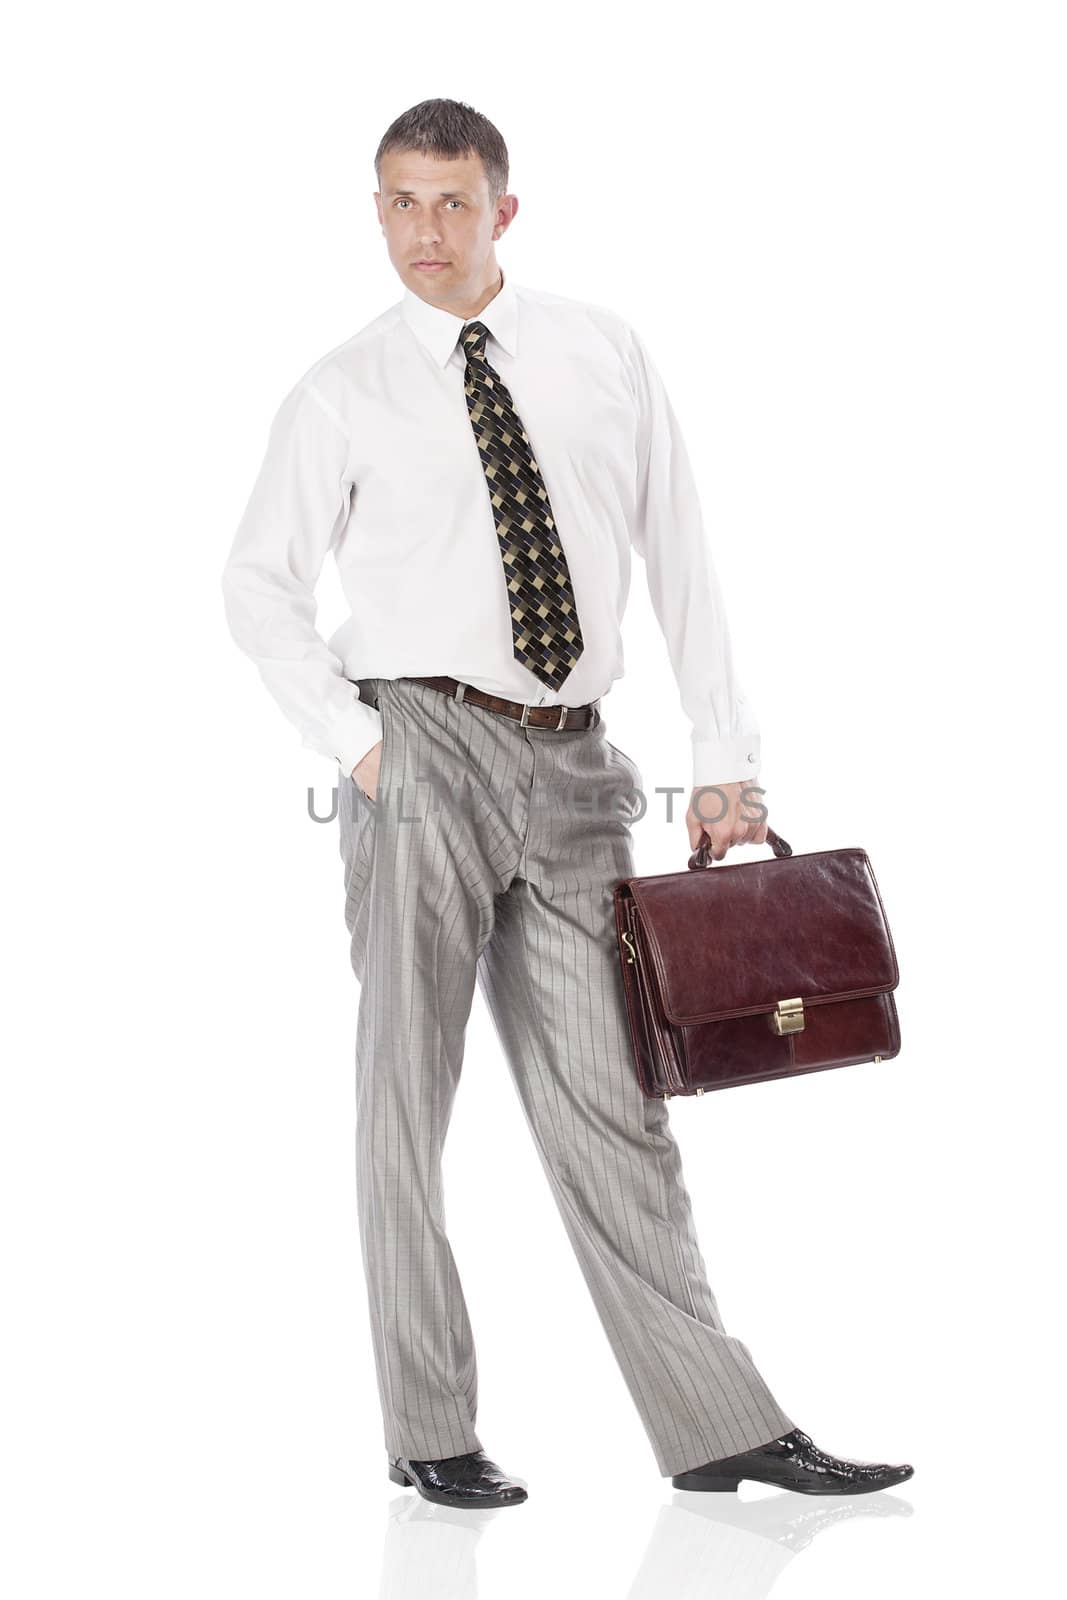 The elegant  businessman  on a white background by sergey150770SV